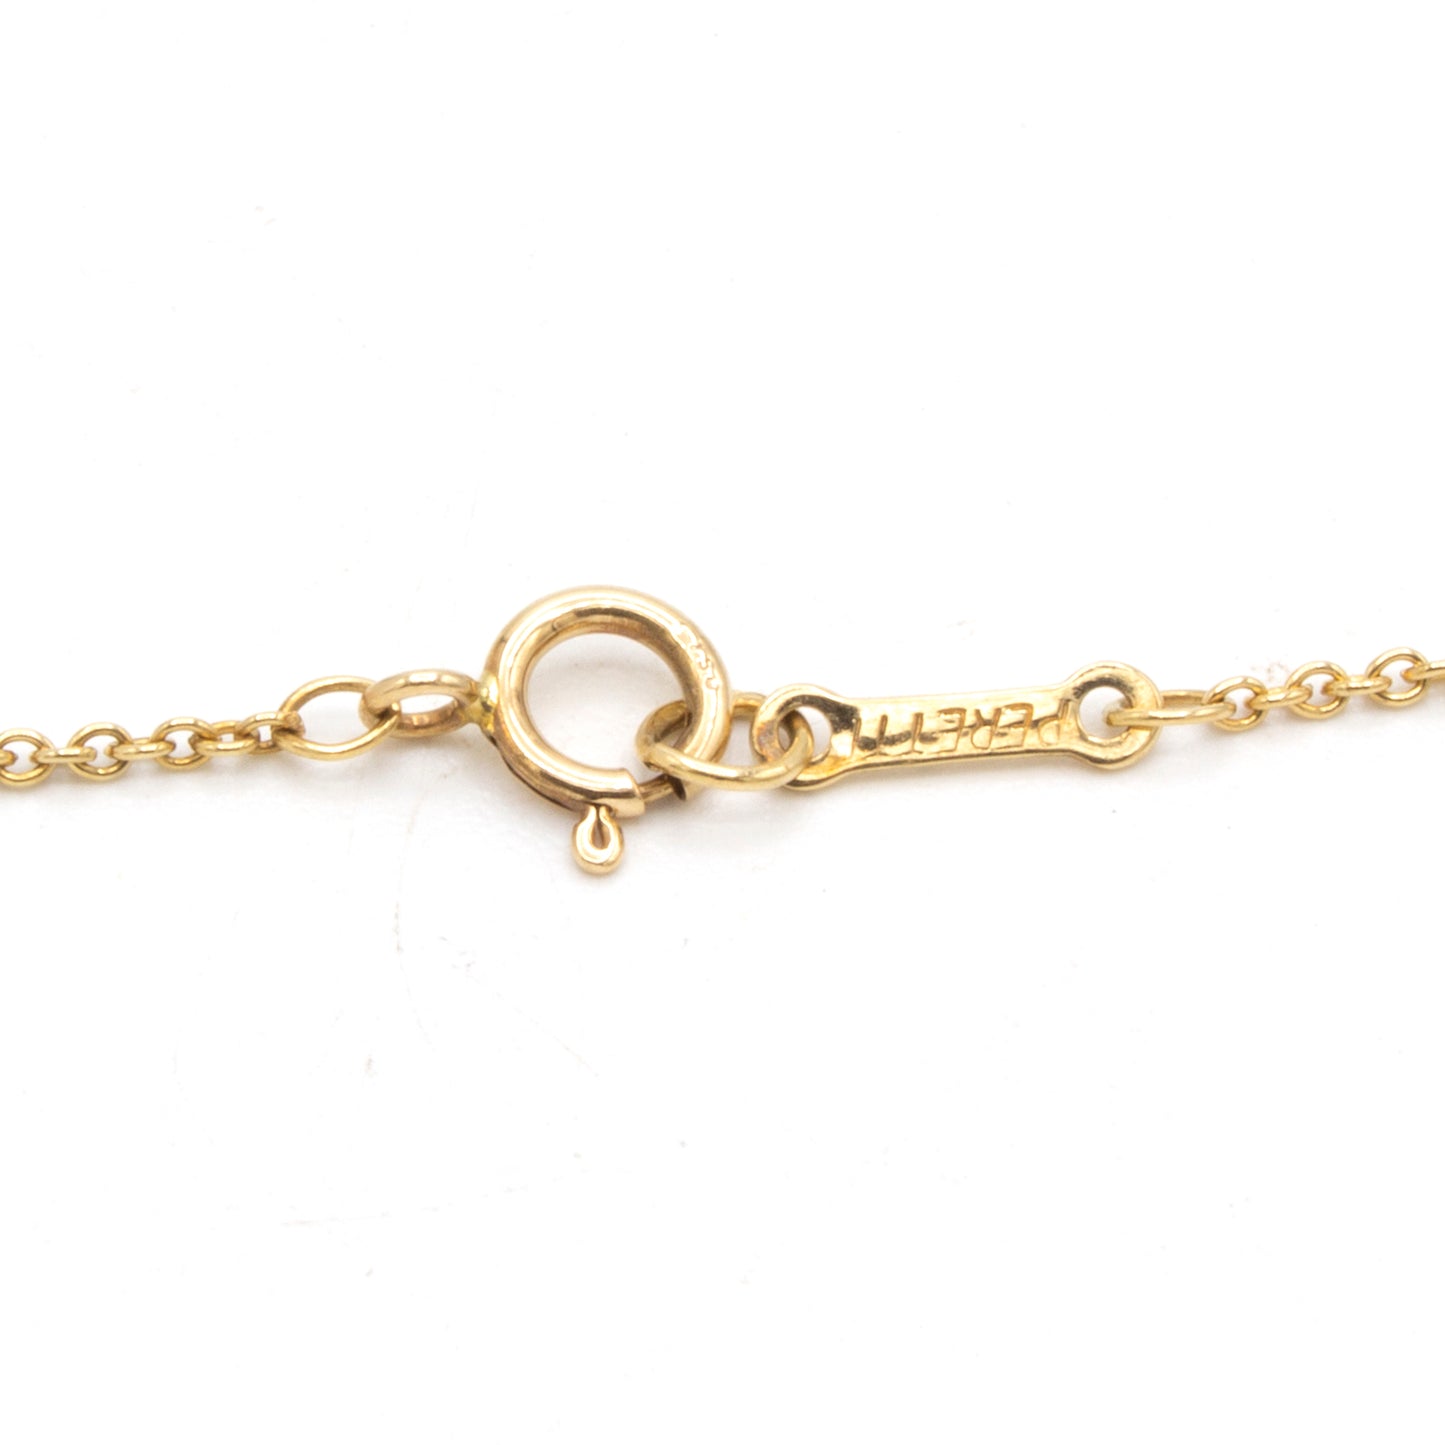 Tiffany & Co David Star 18K necklace